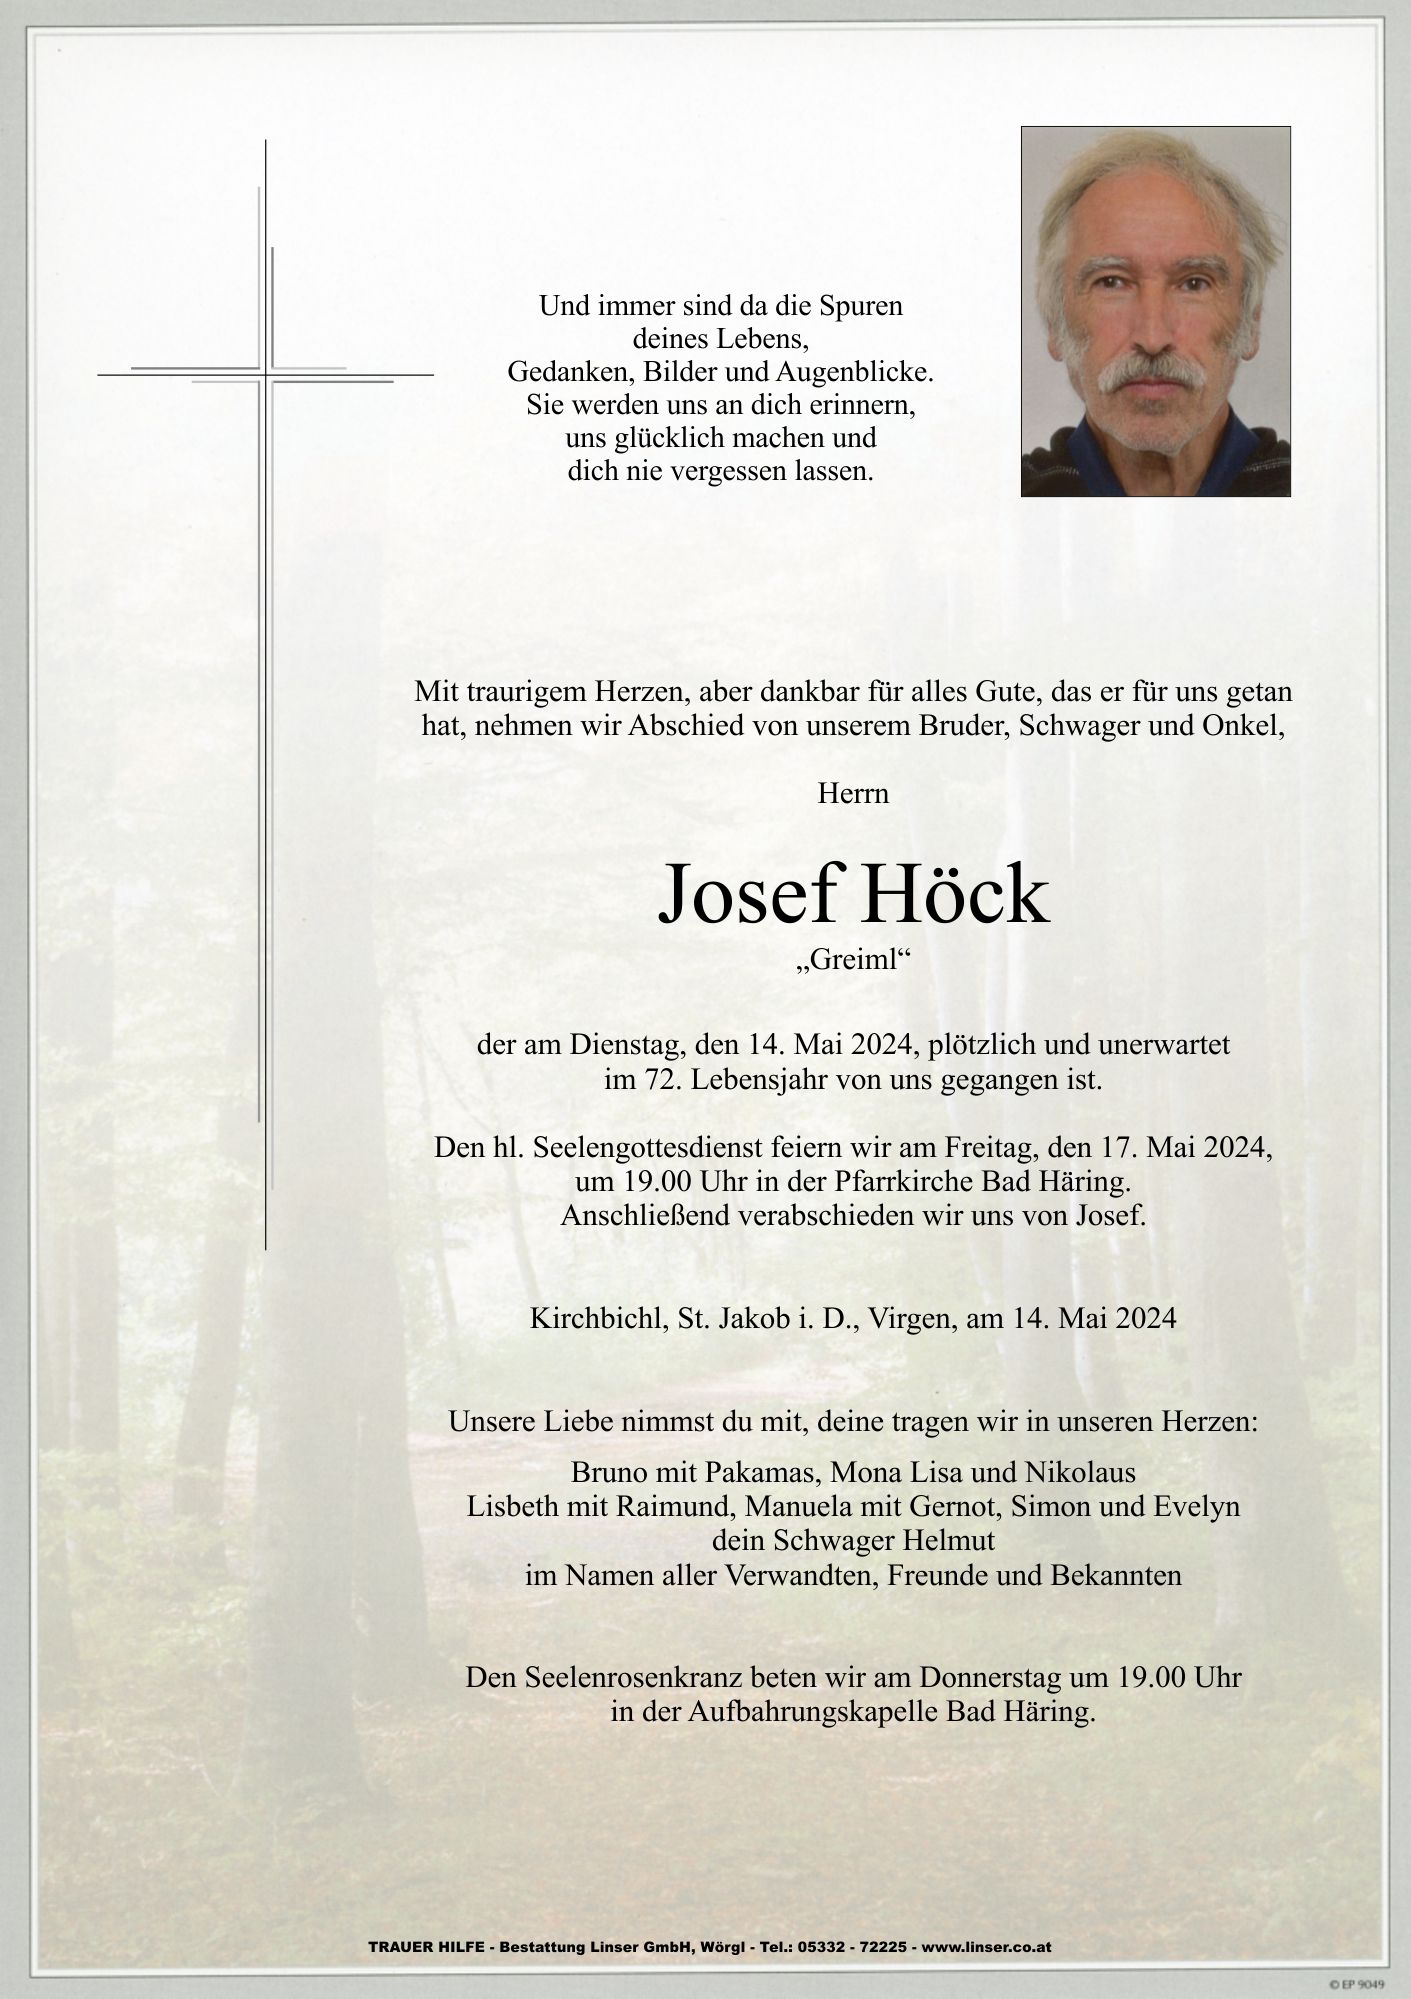 Josef Höck